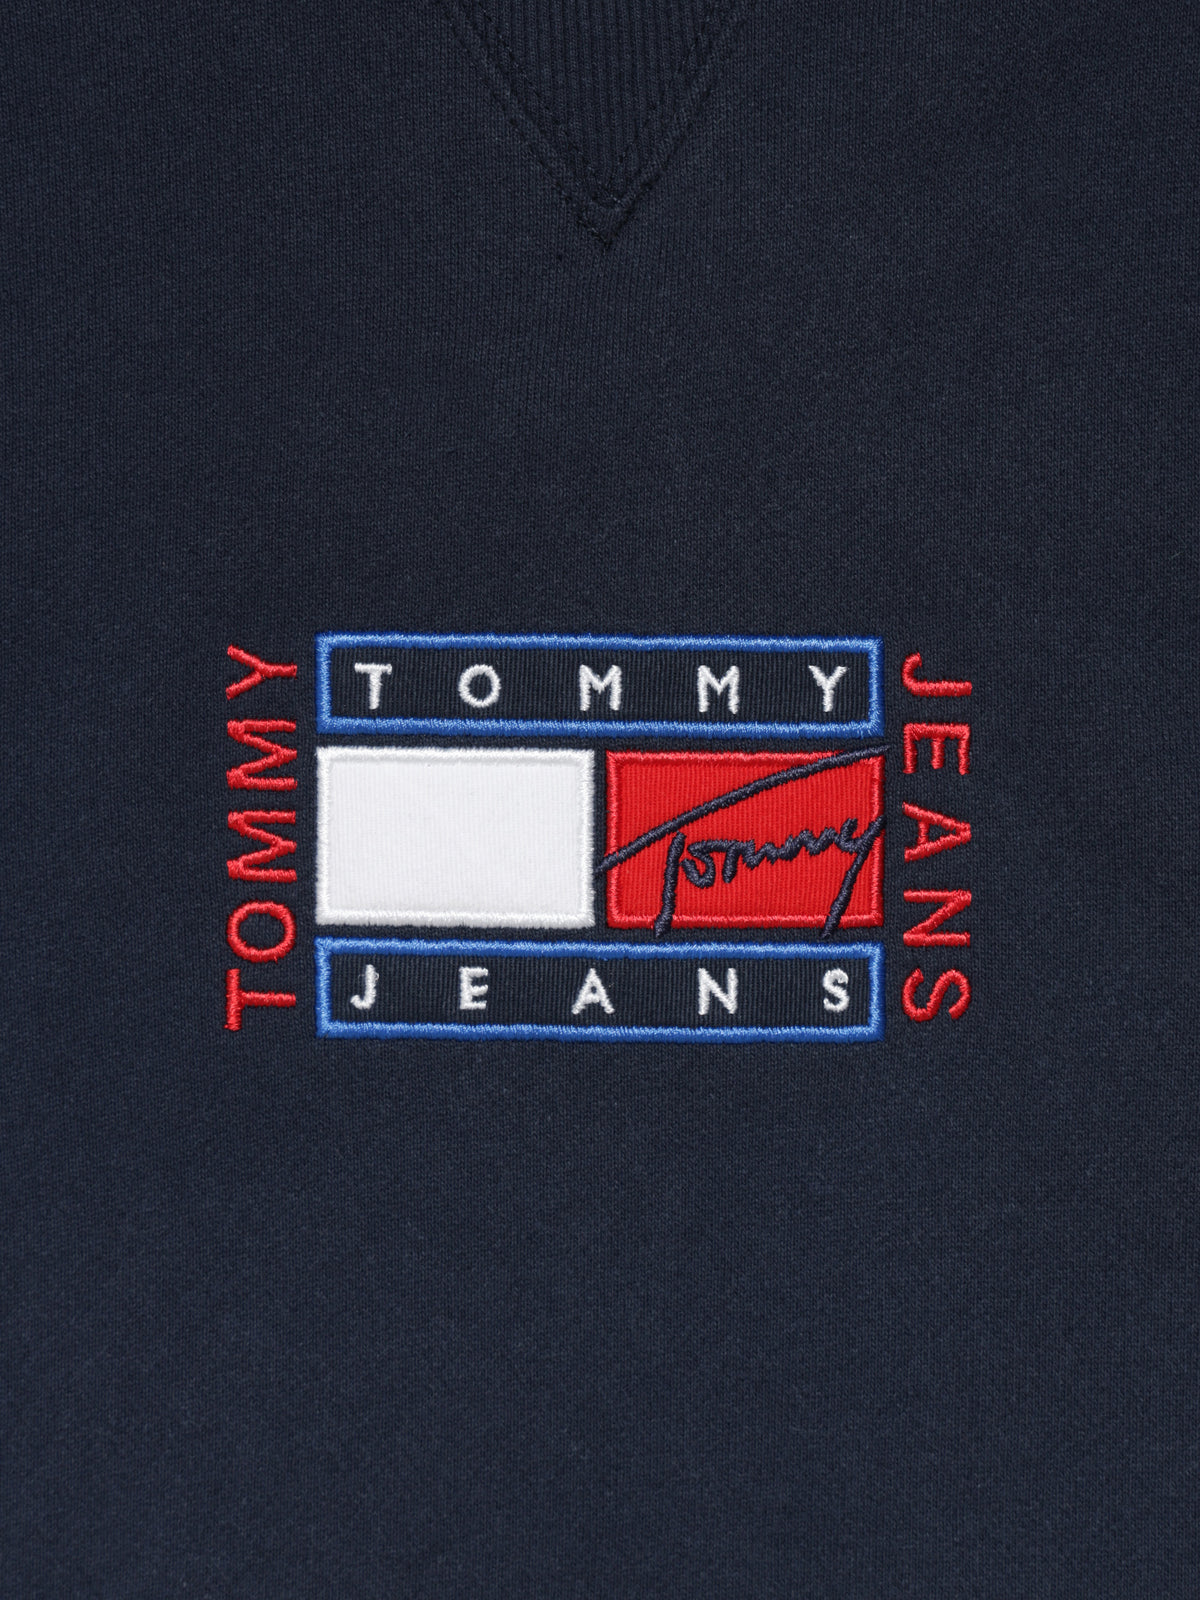 Timeless Tommy Sweatshirt in Navy